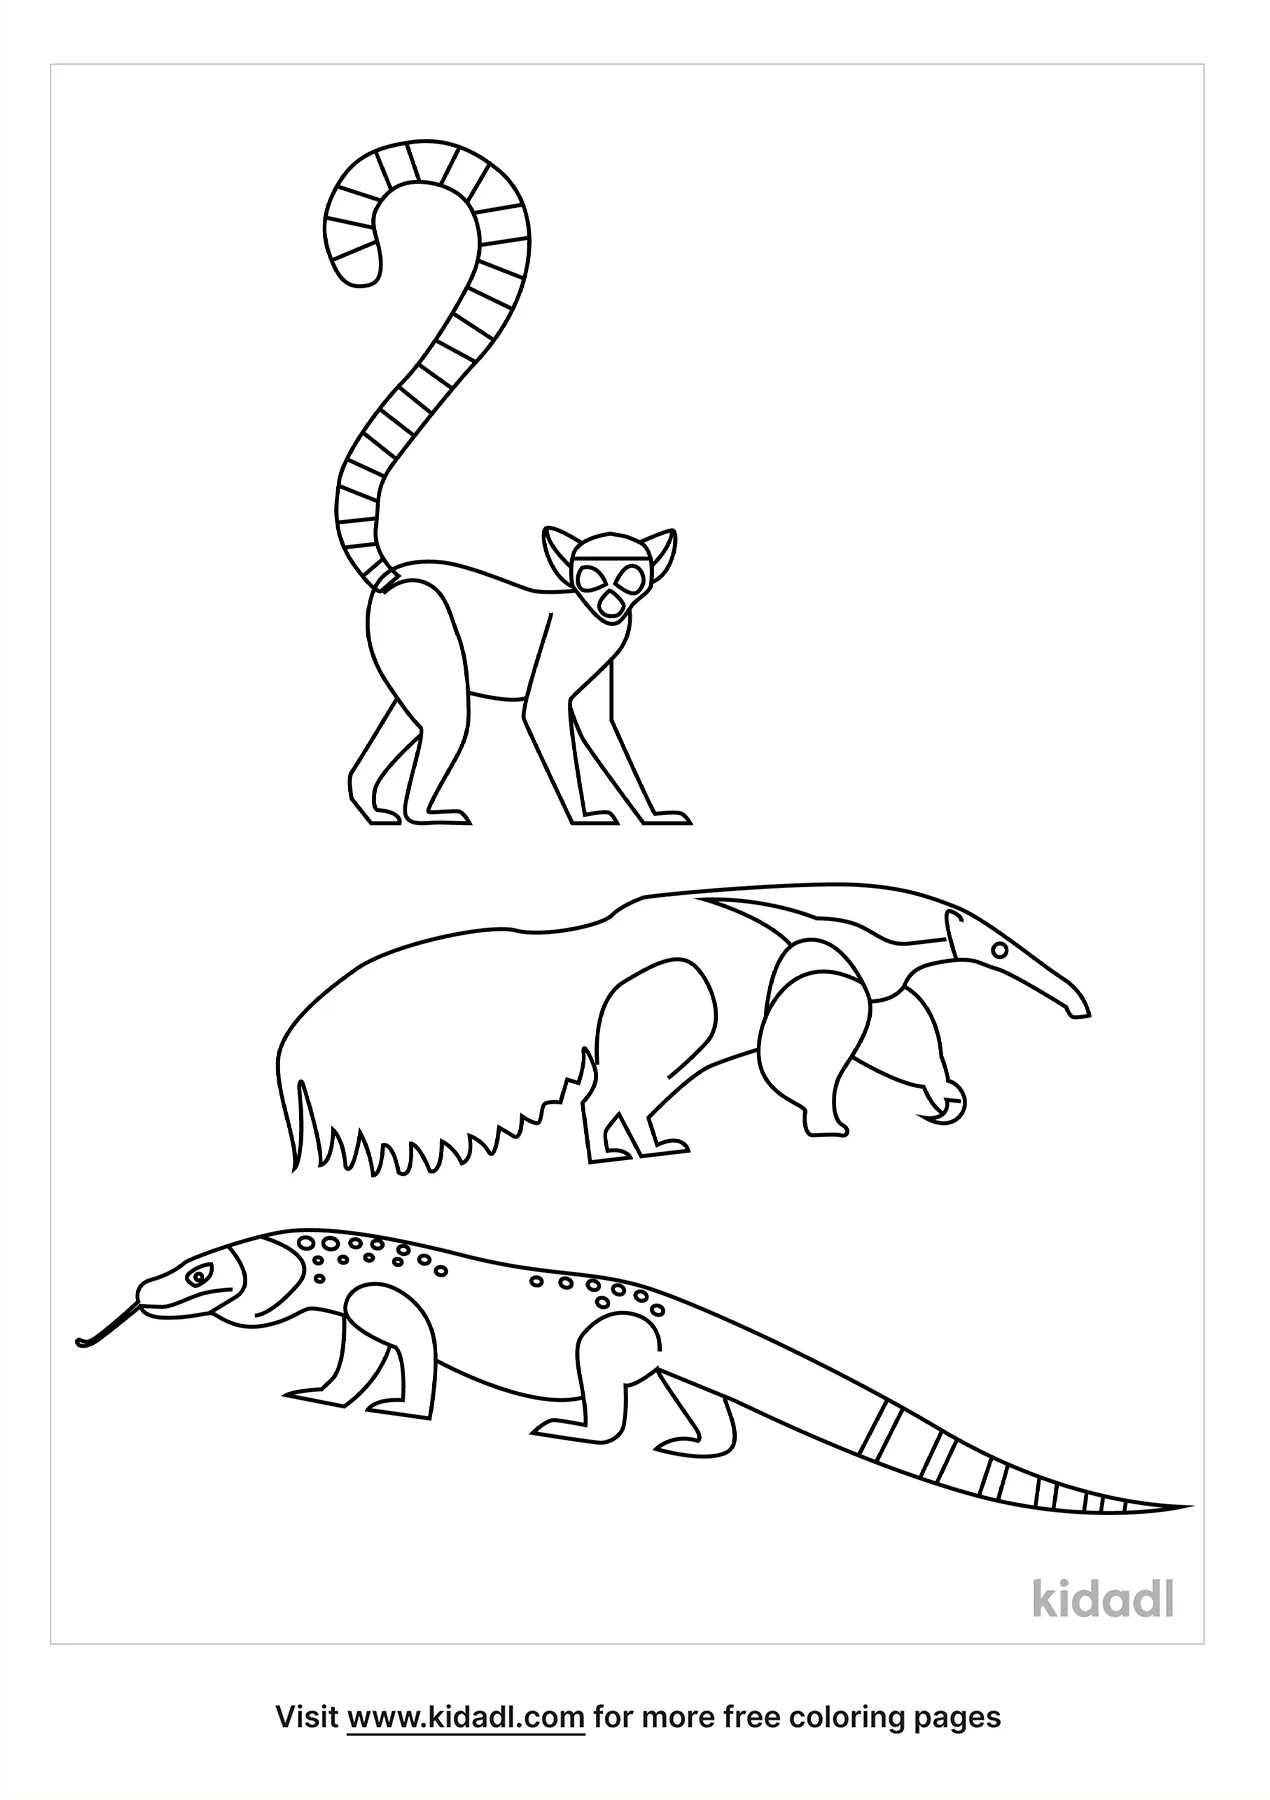 Free Endangered Species Coloring Page | Coloring Page Printables | Kidadl